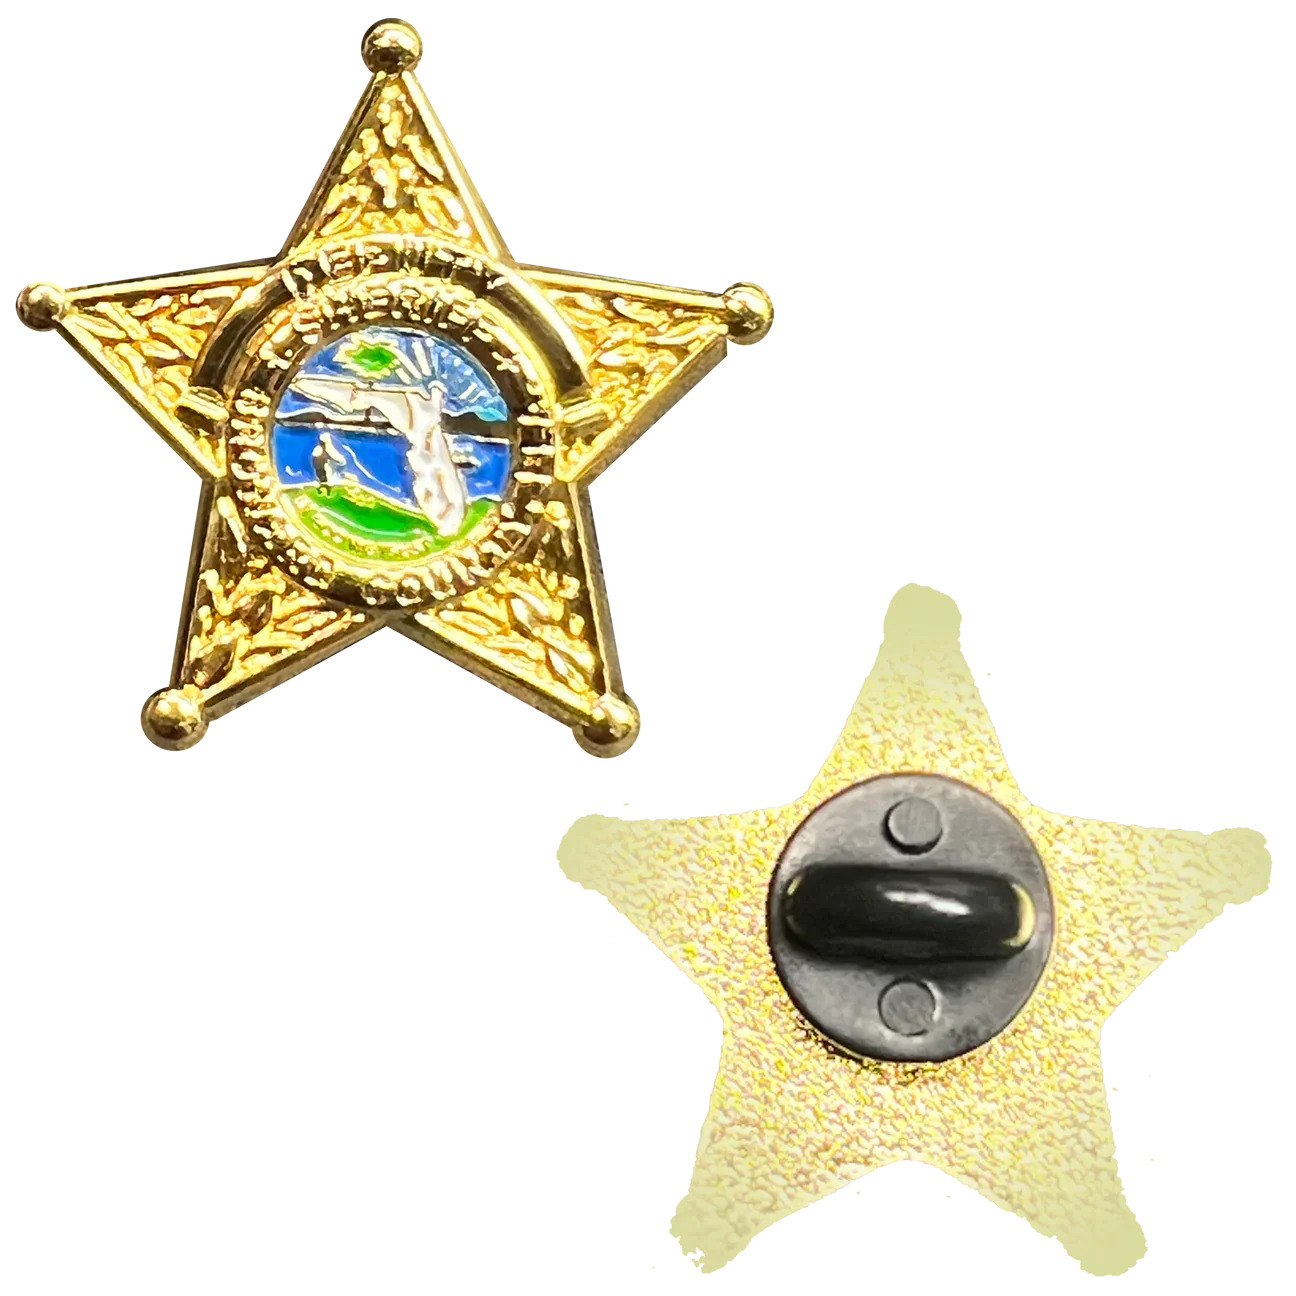 Deputy Sheriff Broward Sheriff\'s Office Police Lapel Pin Broward County Florida